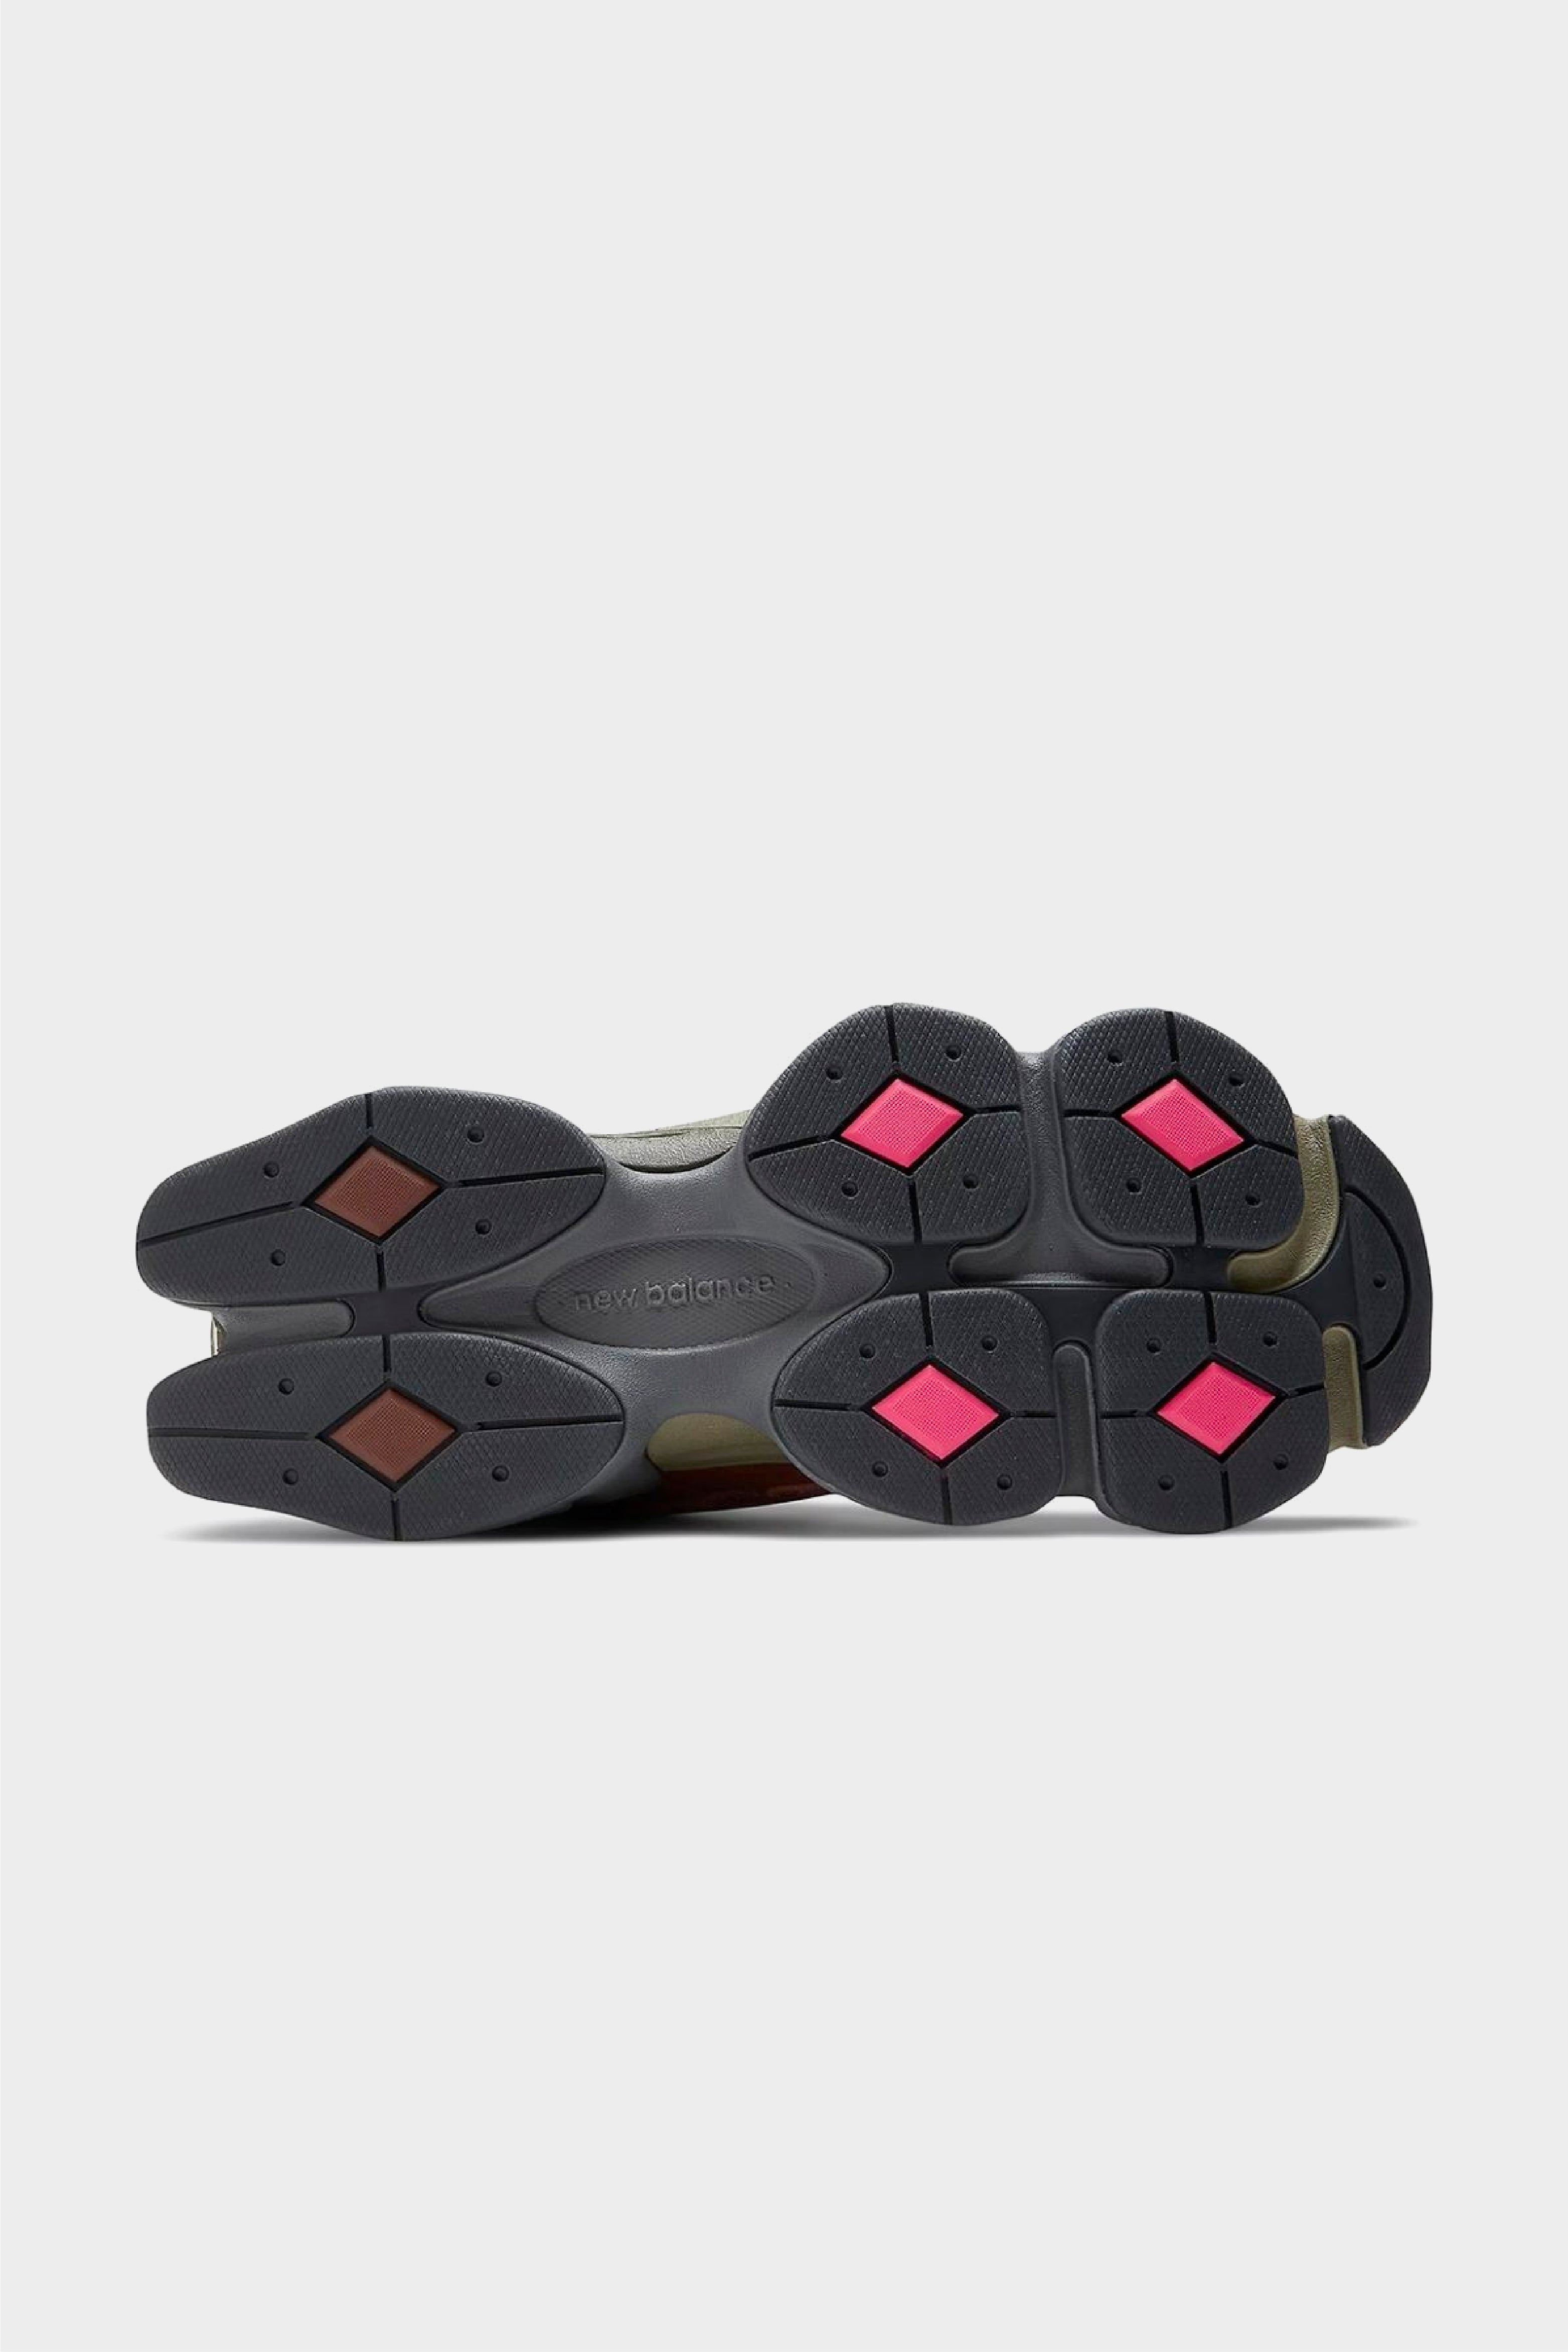 Selectshop FRAME - NEW BALANCE 9060 "Rich Oak Burgundy" Footwear Concept Store Dubai